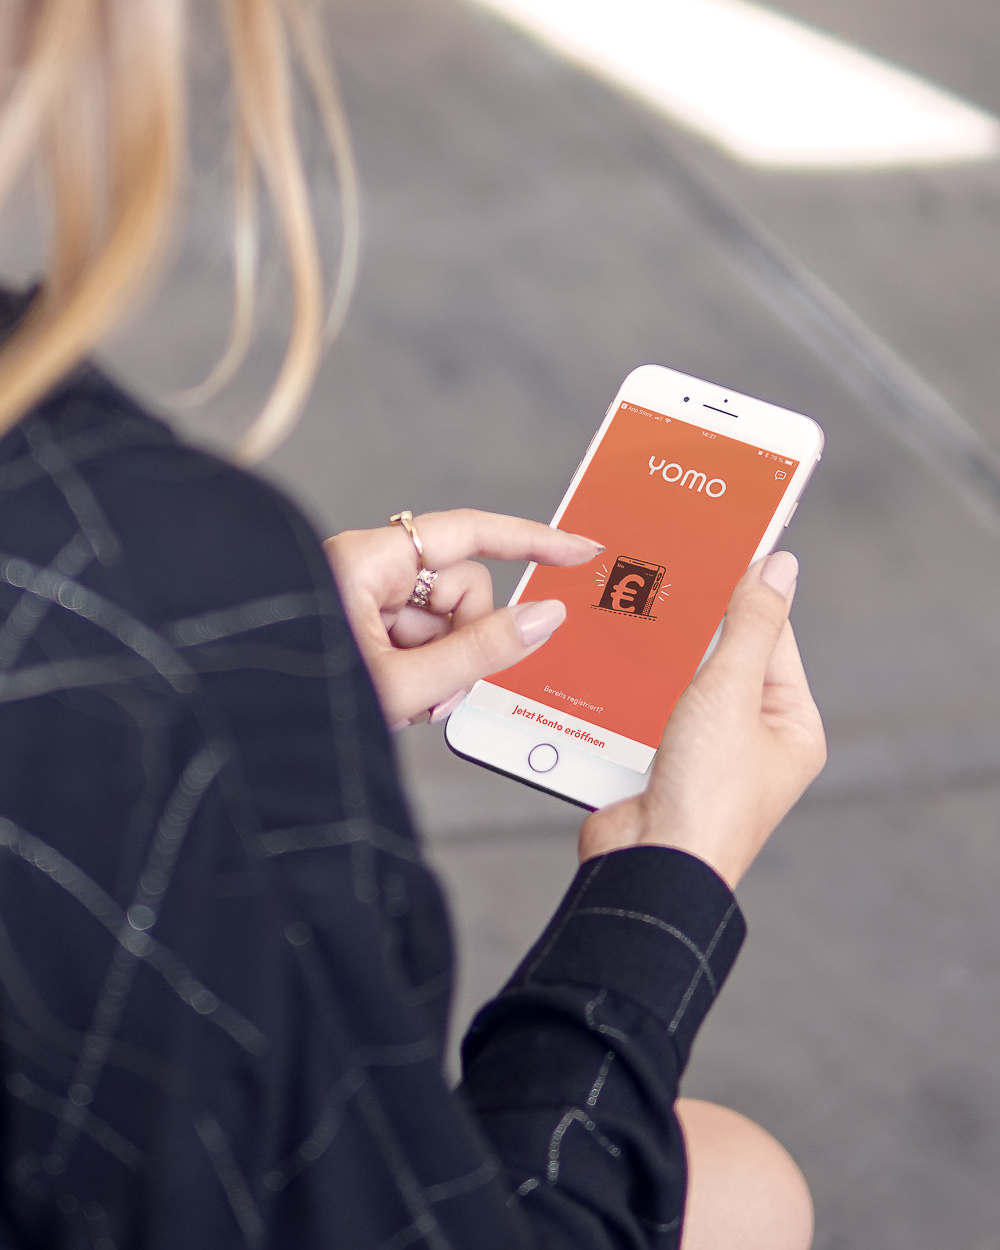 Yomo App Mobile Banking für das Smartphone